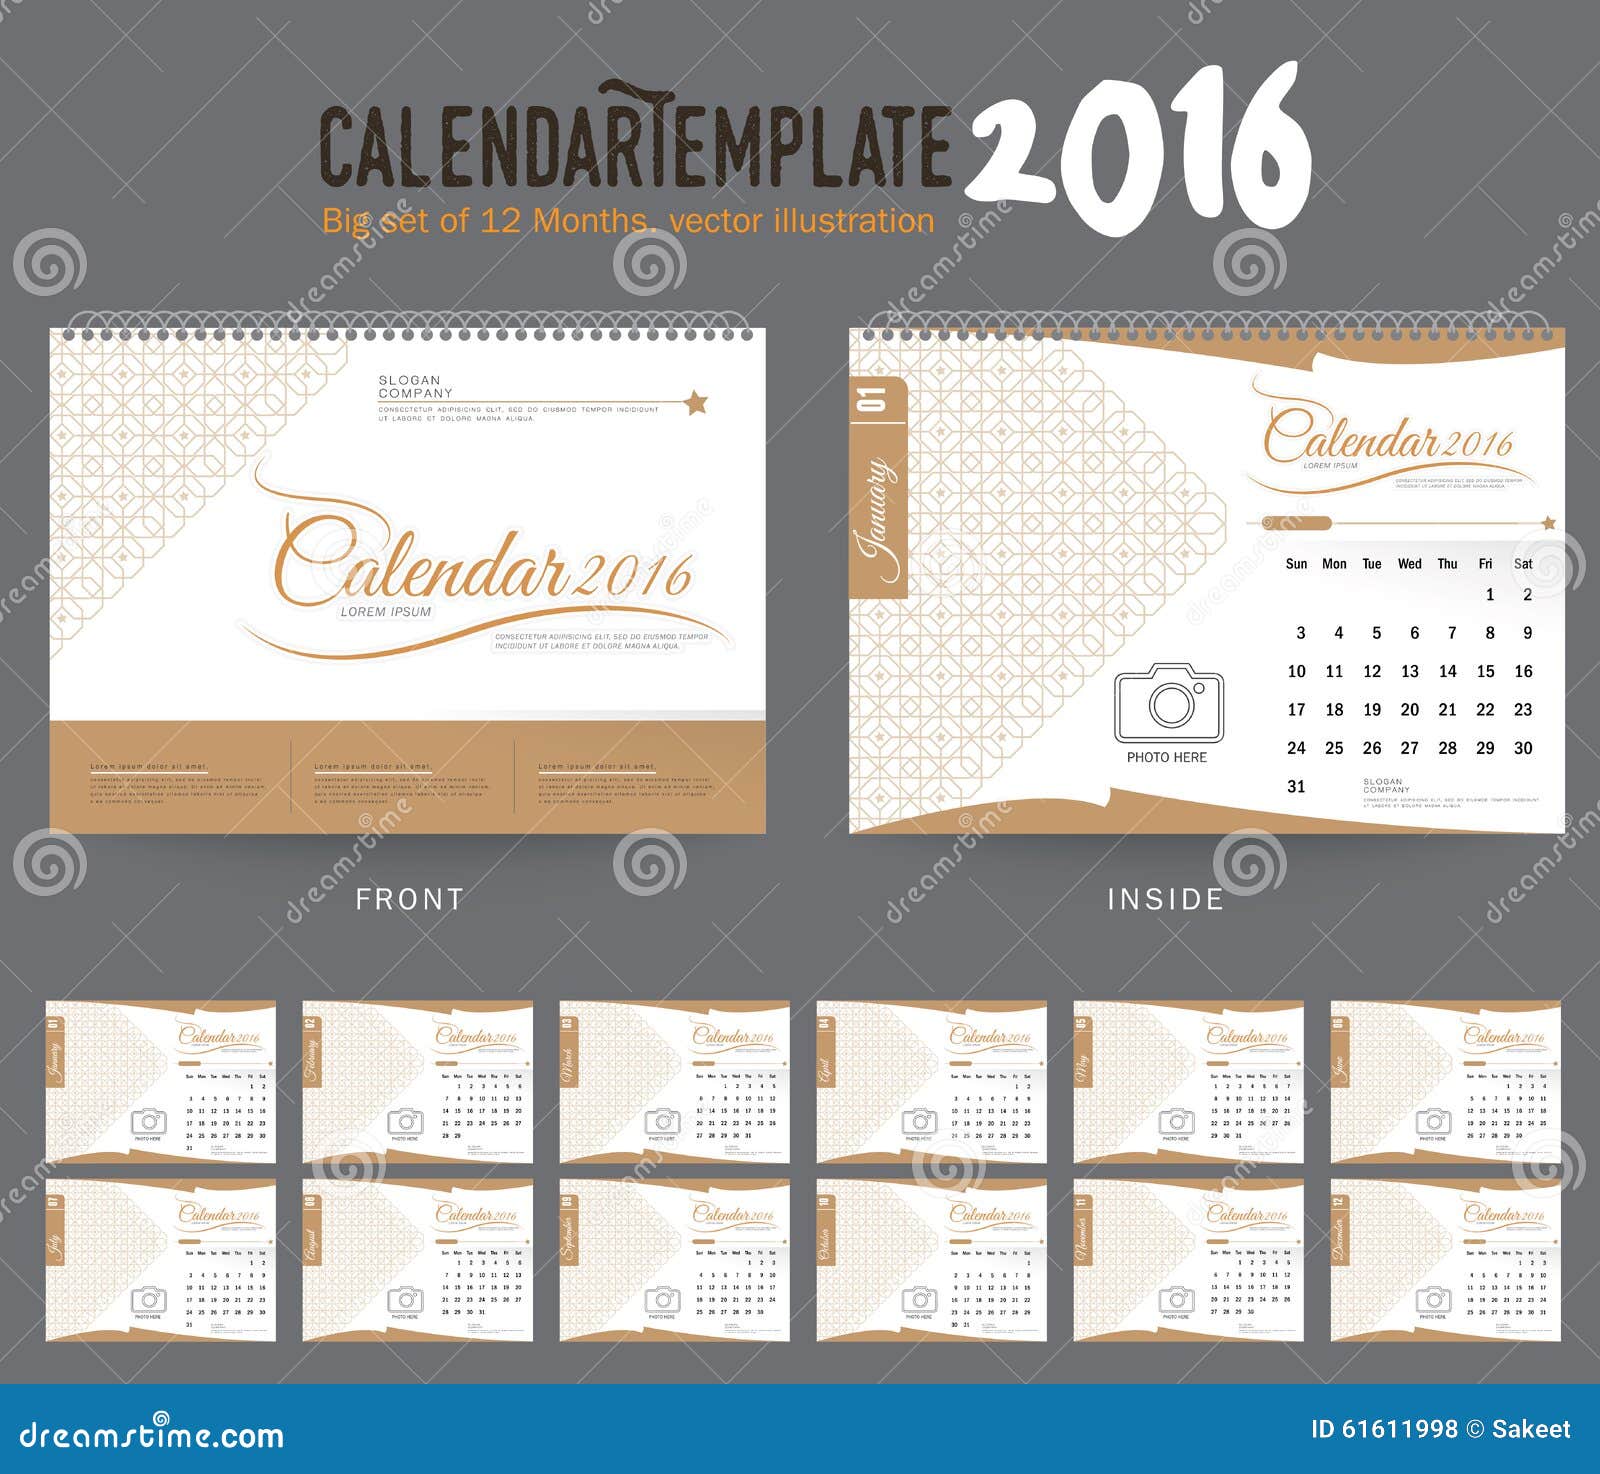 Desk Calendar 2016 Vector Design Template Big Set Of 12 Months